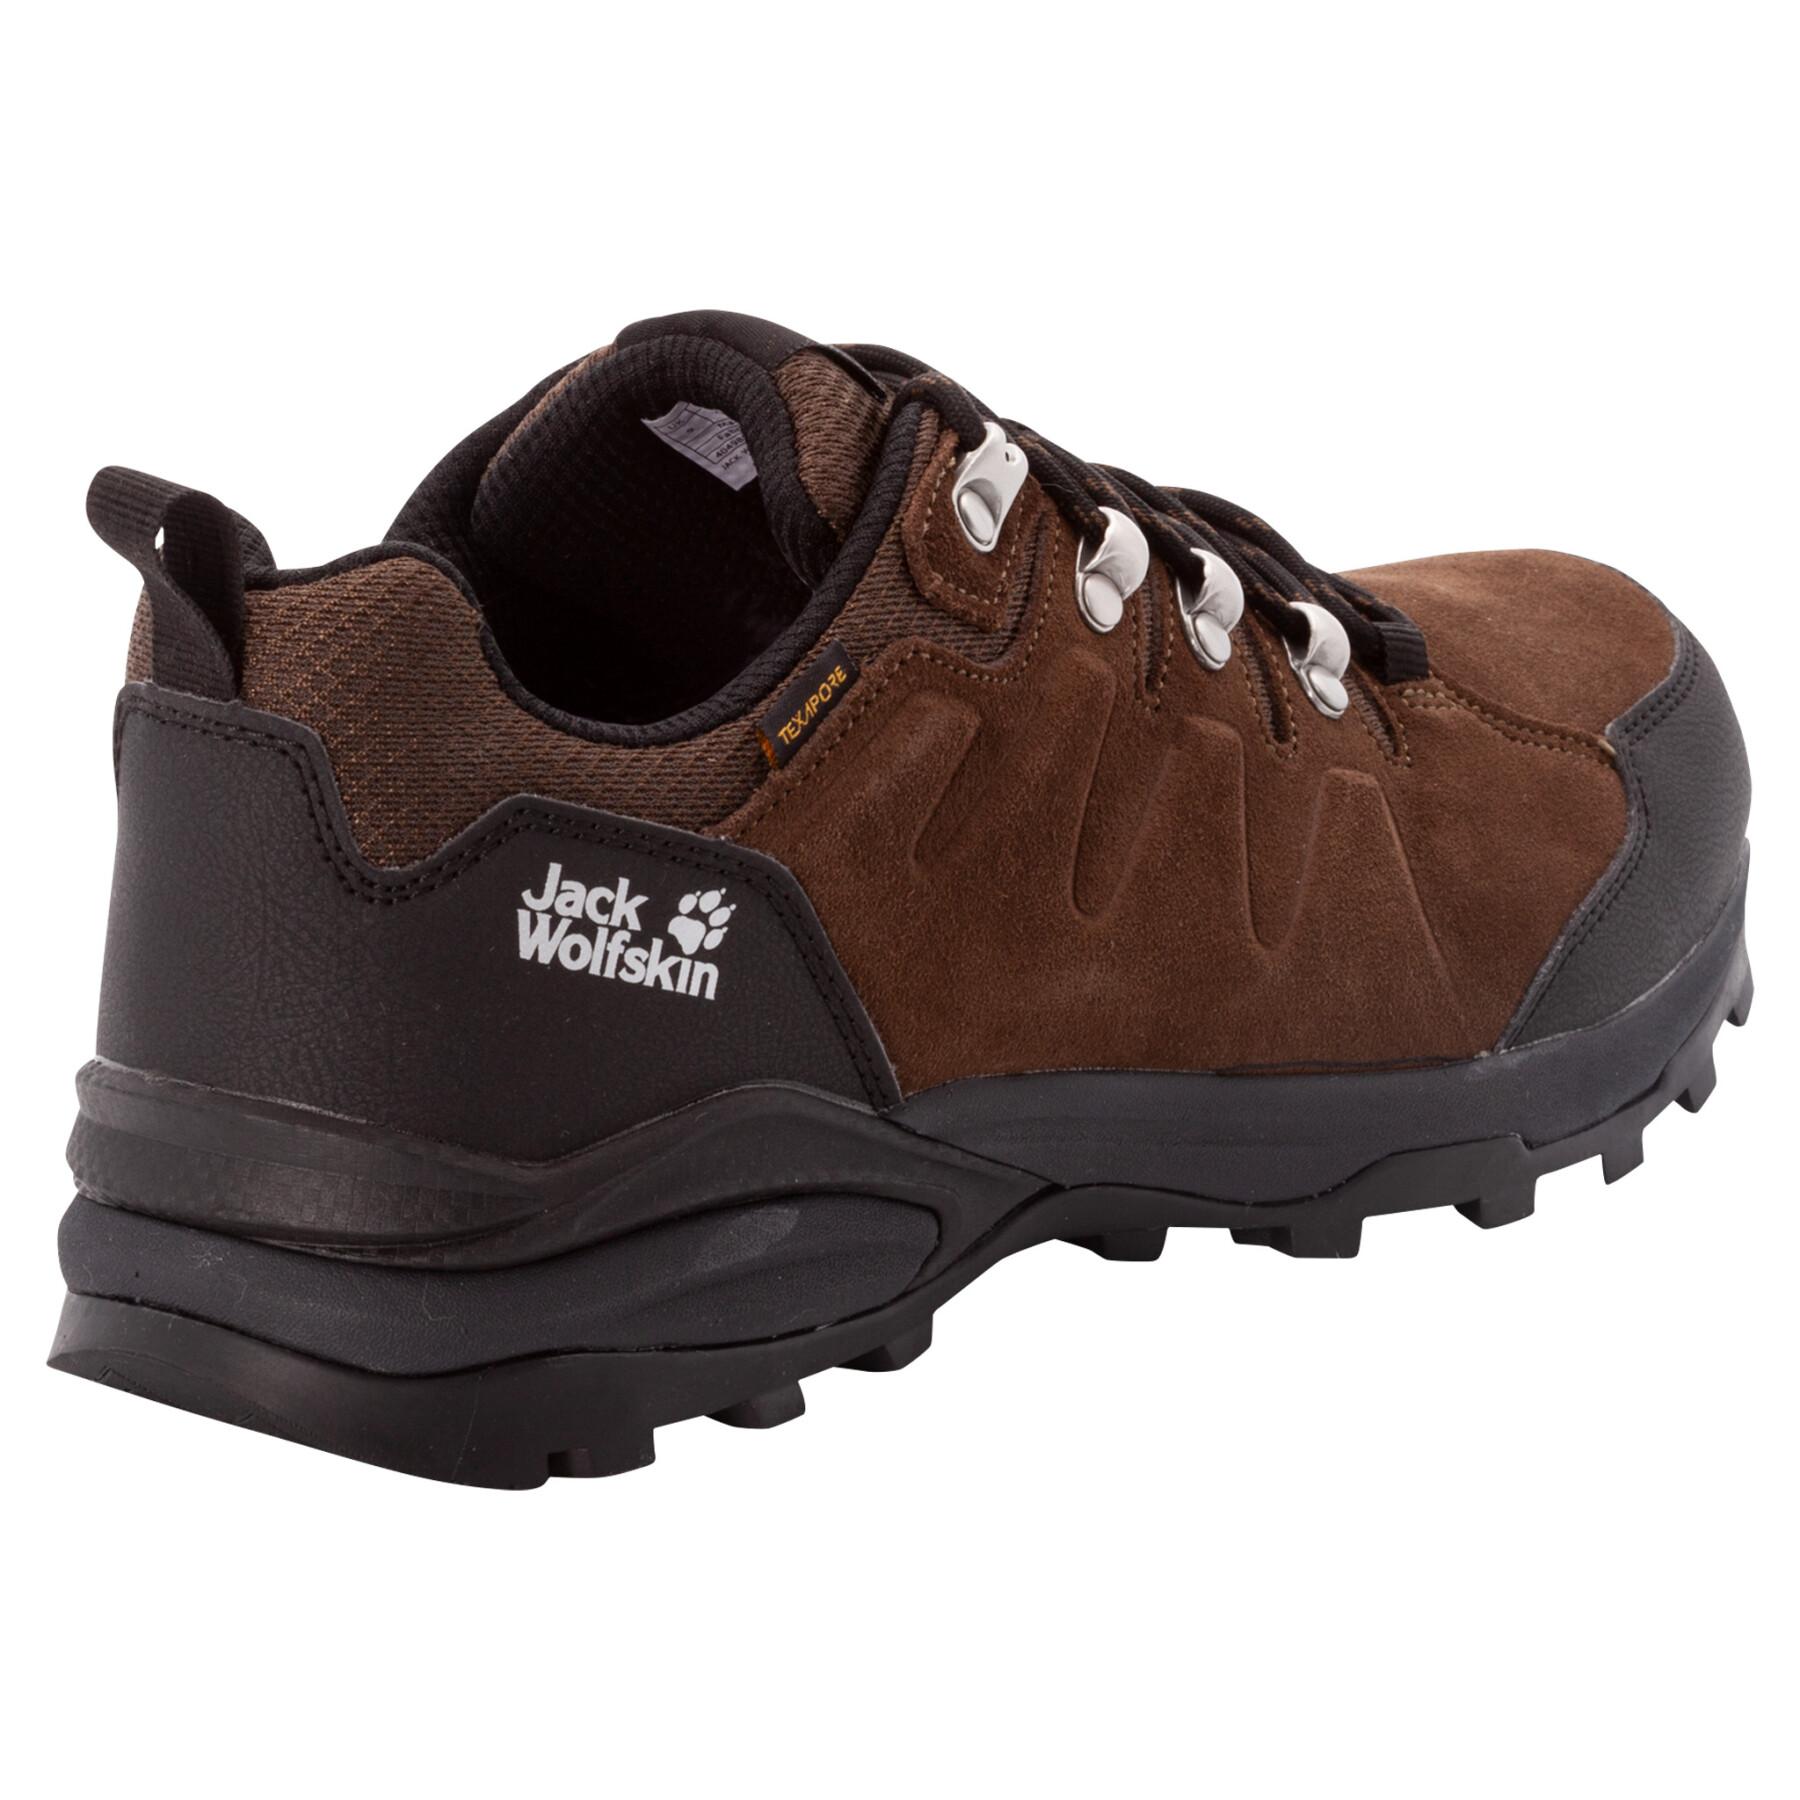 Hiking shoes Jack Wolfskin refugio texapore low